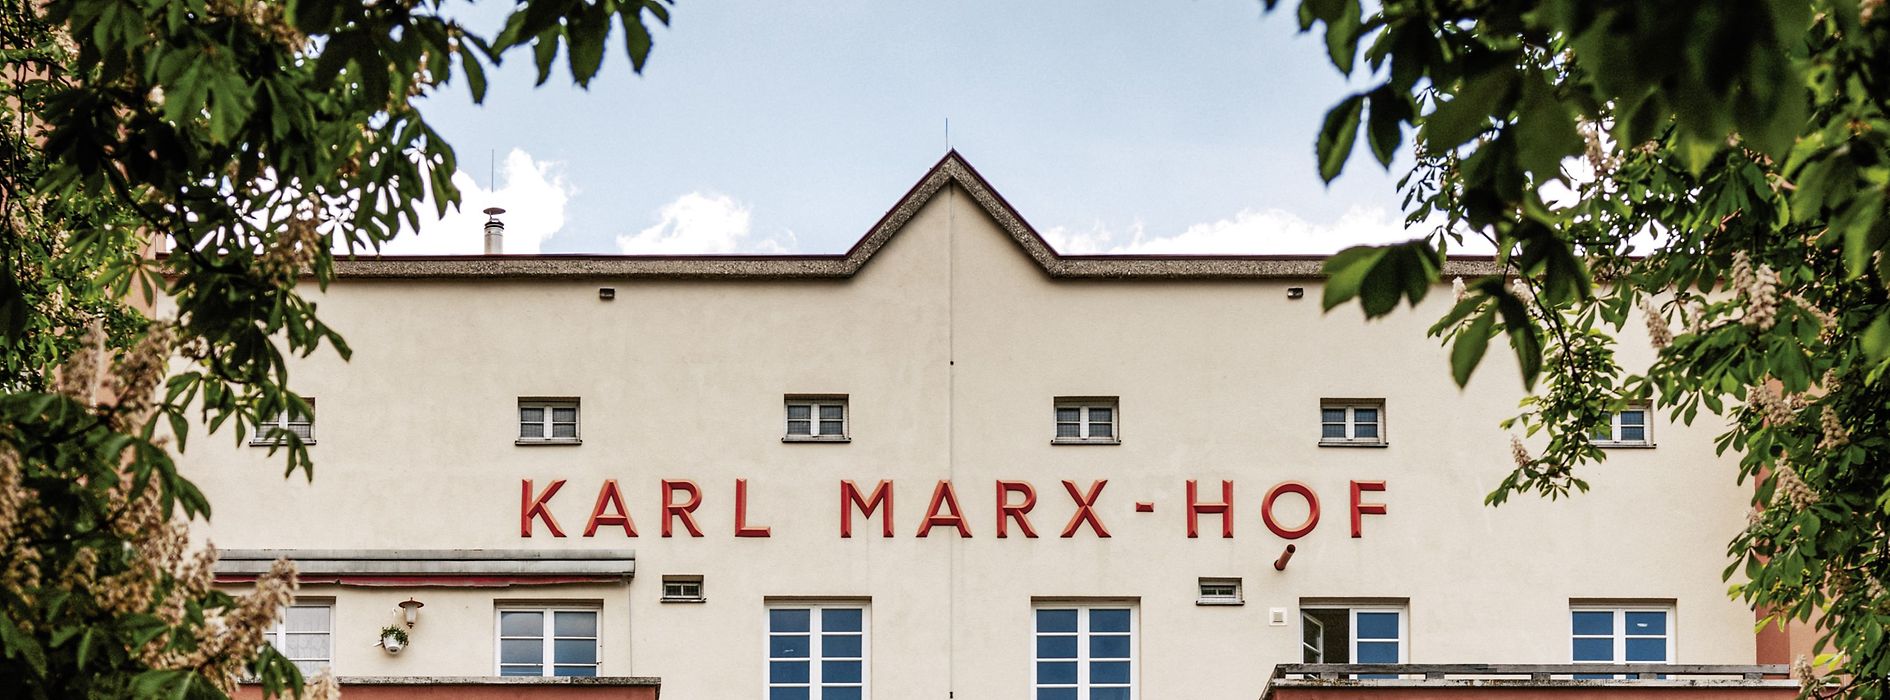 Edificio comunale, Karl Marx Hof, veduta dell’esterno